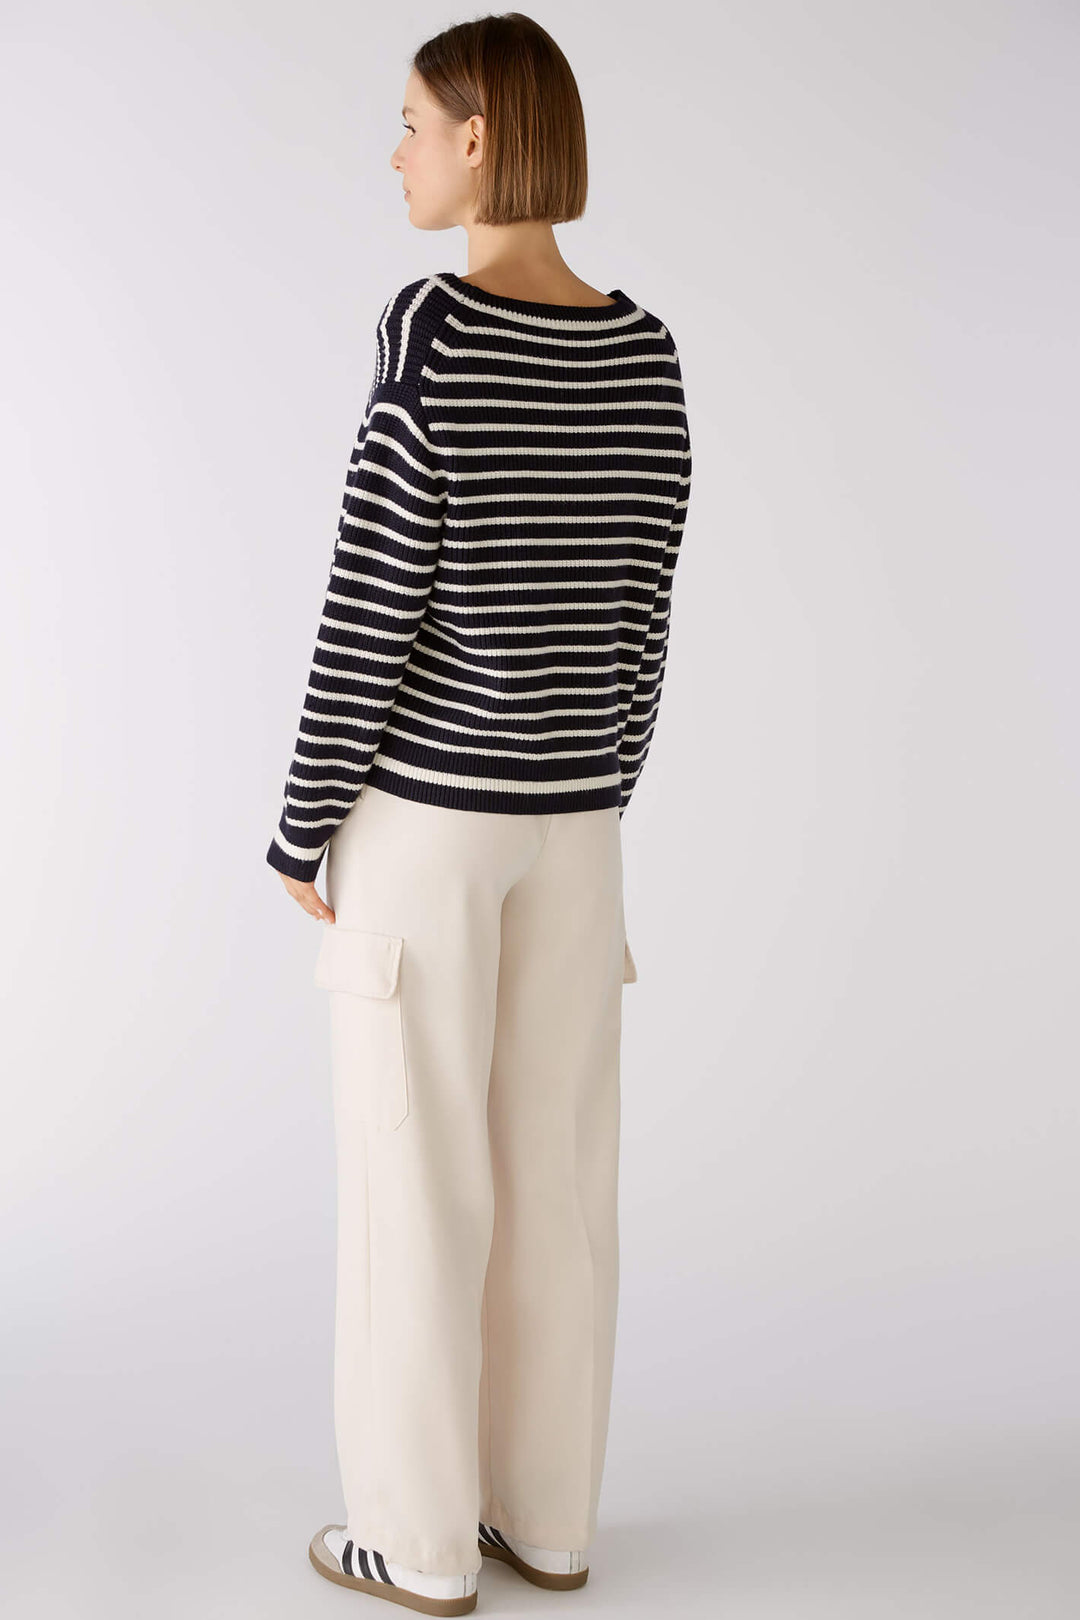 Oui 79277 Navy White Stripe Wide Neck Jumper - Olivia Grace Fashion